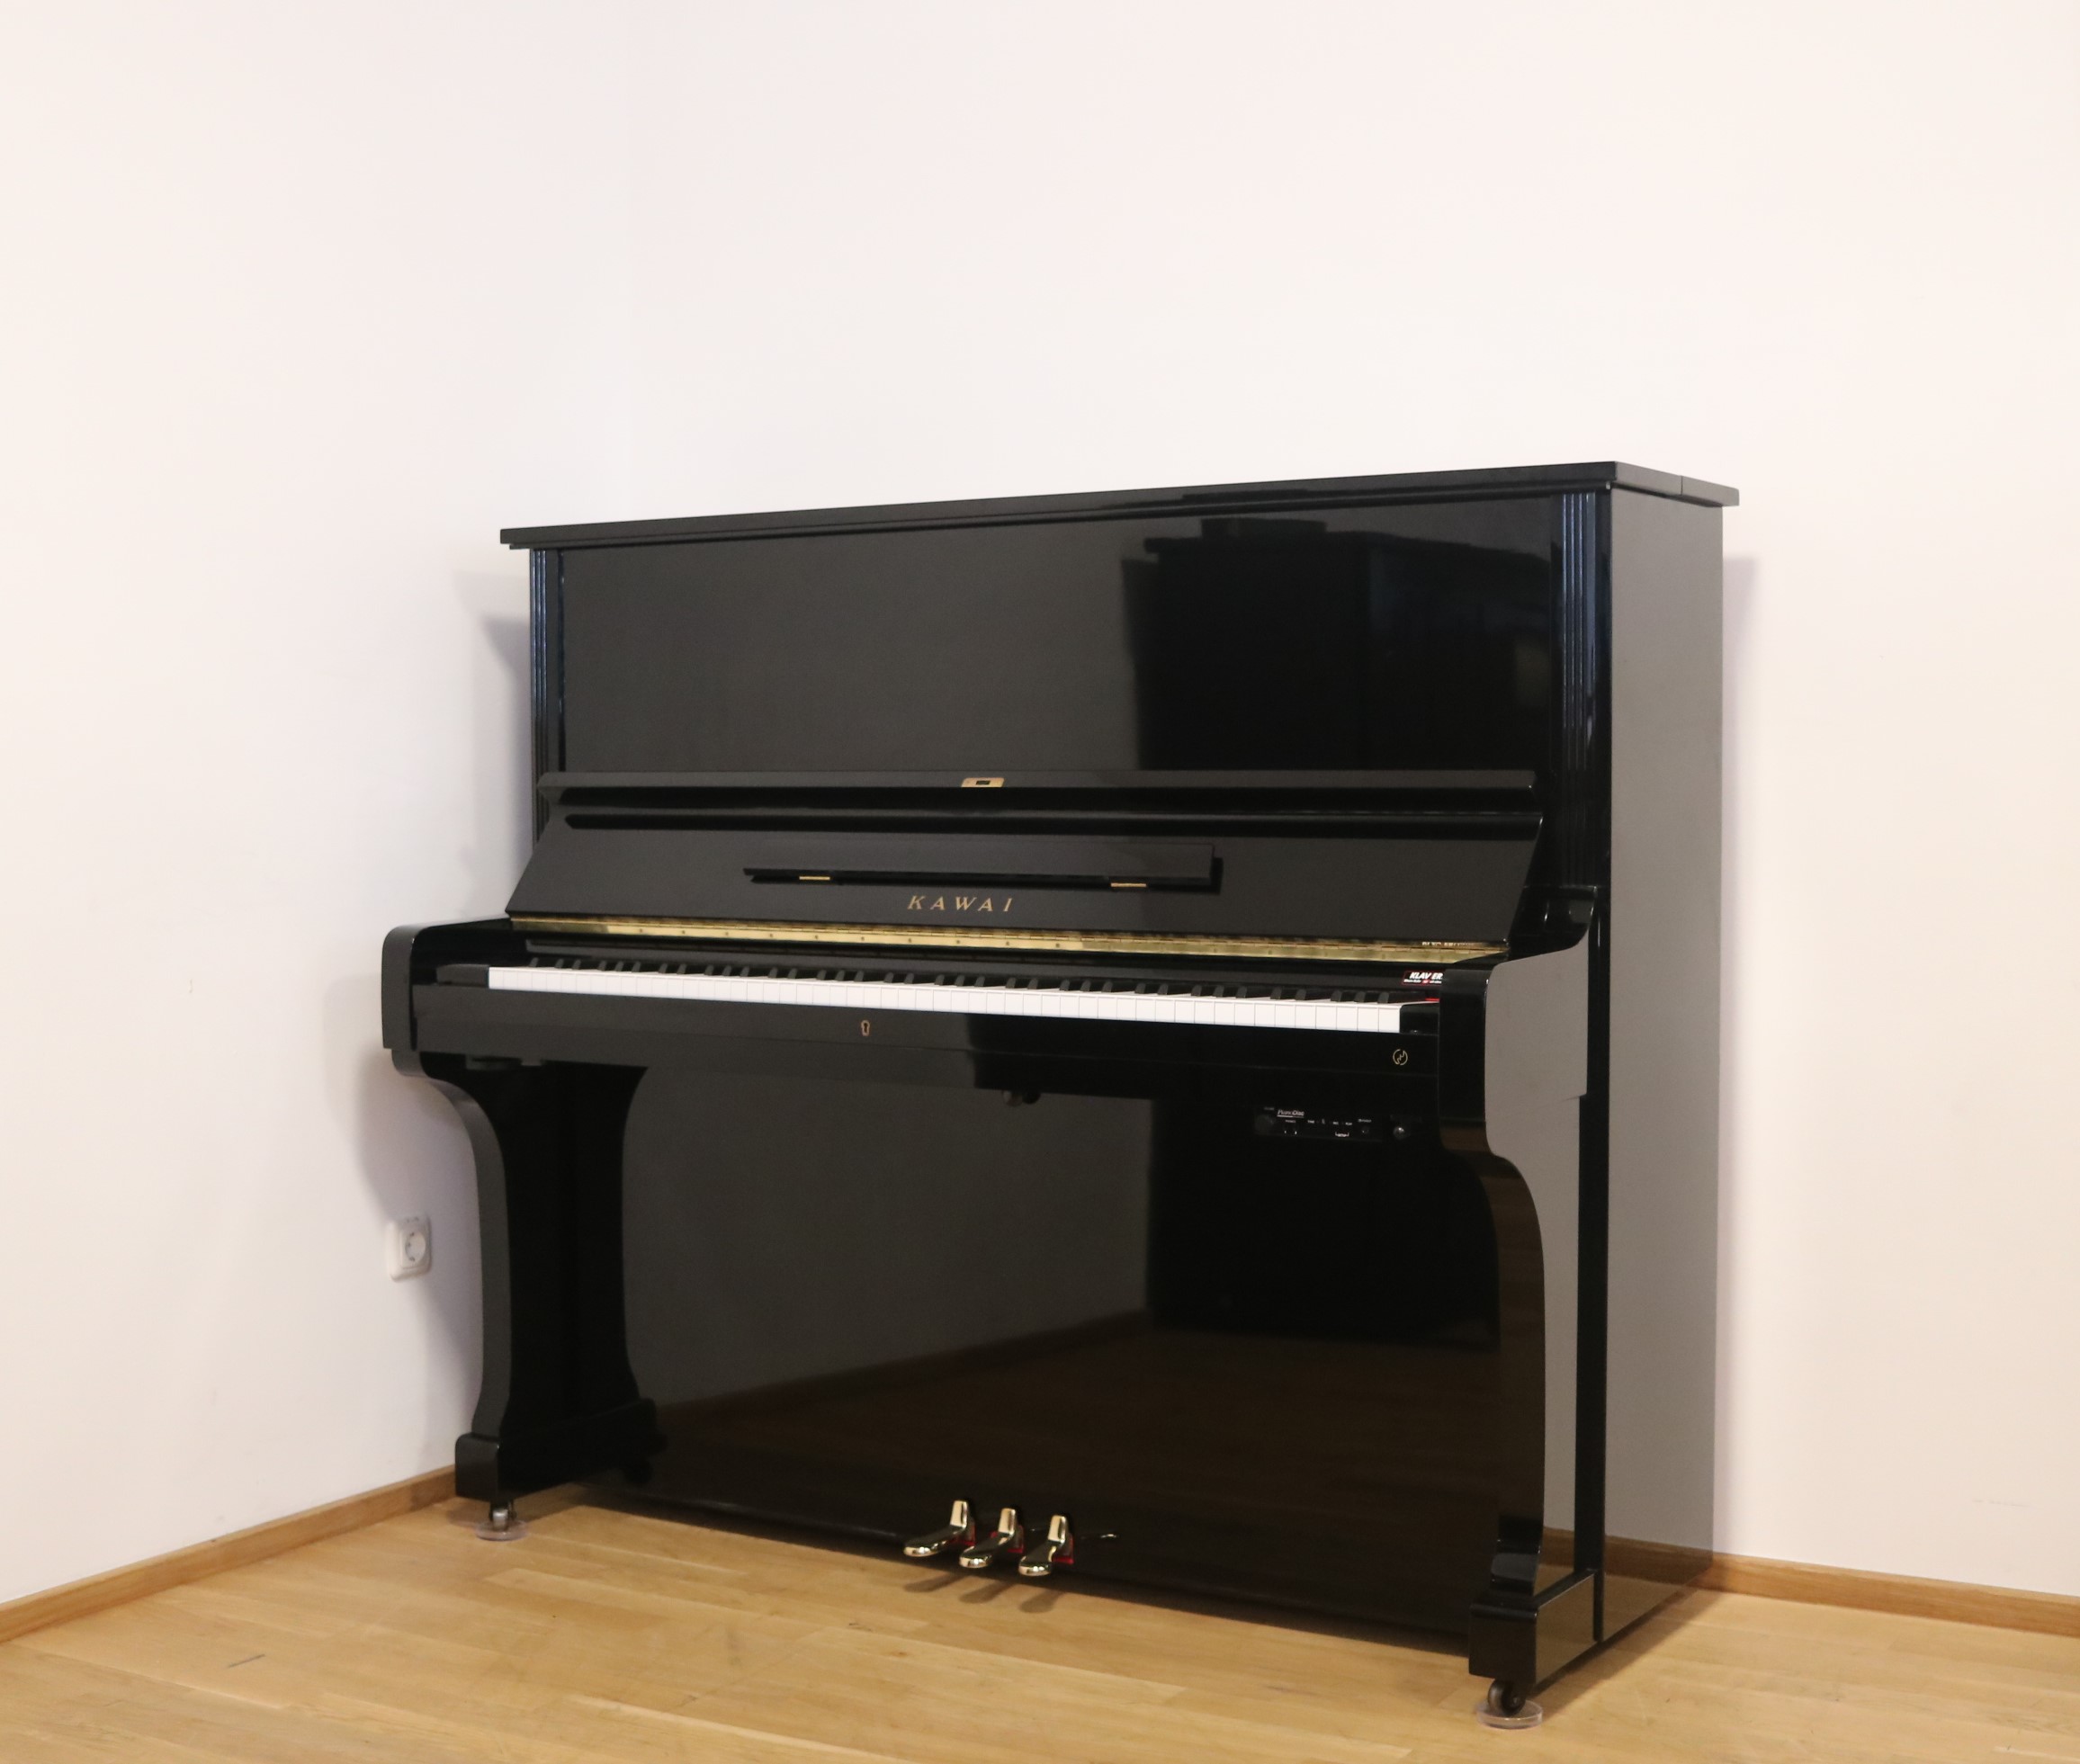 KAWAI BL-61 Klavier